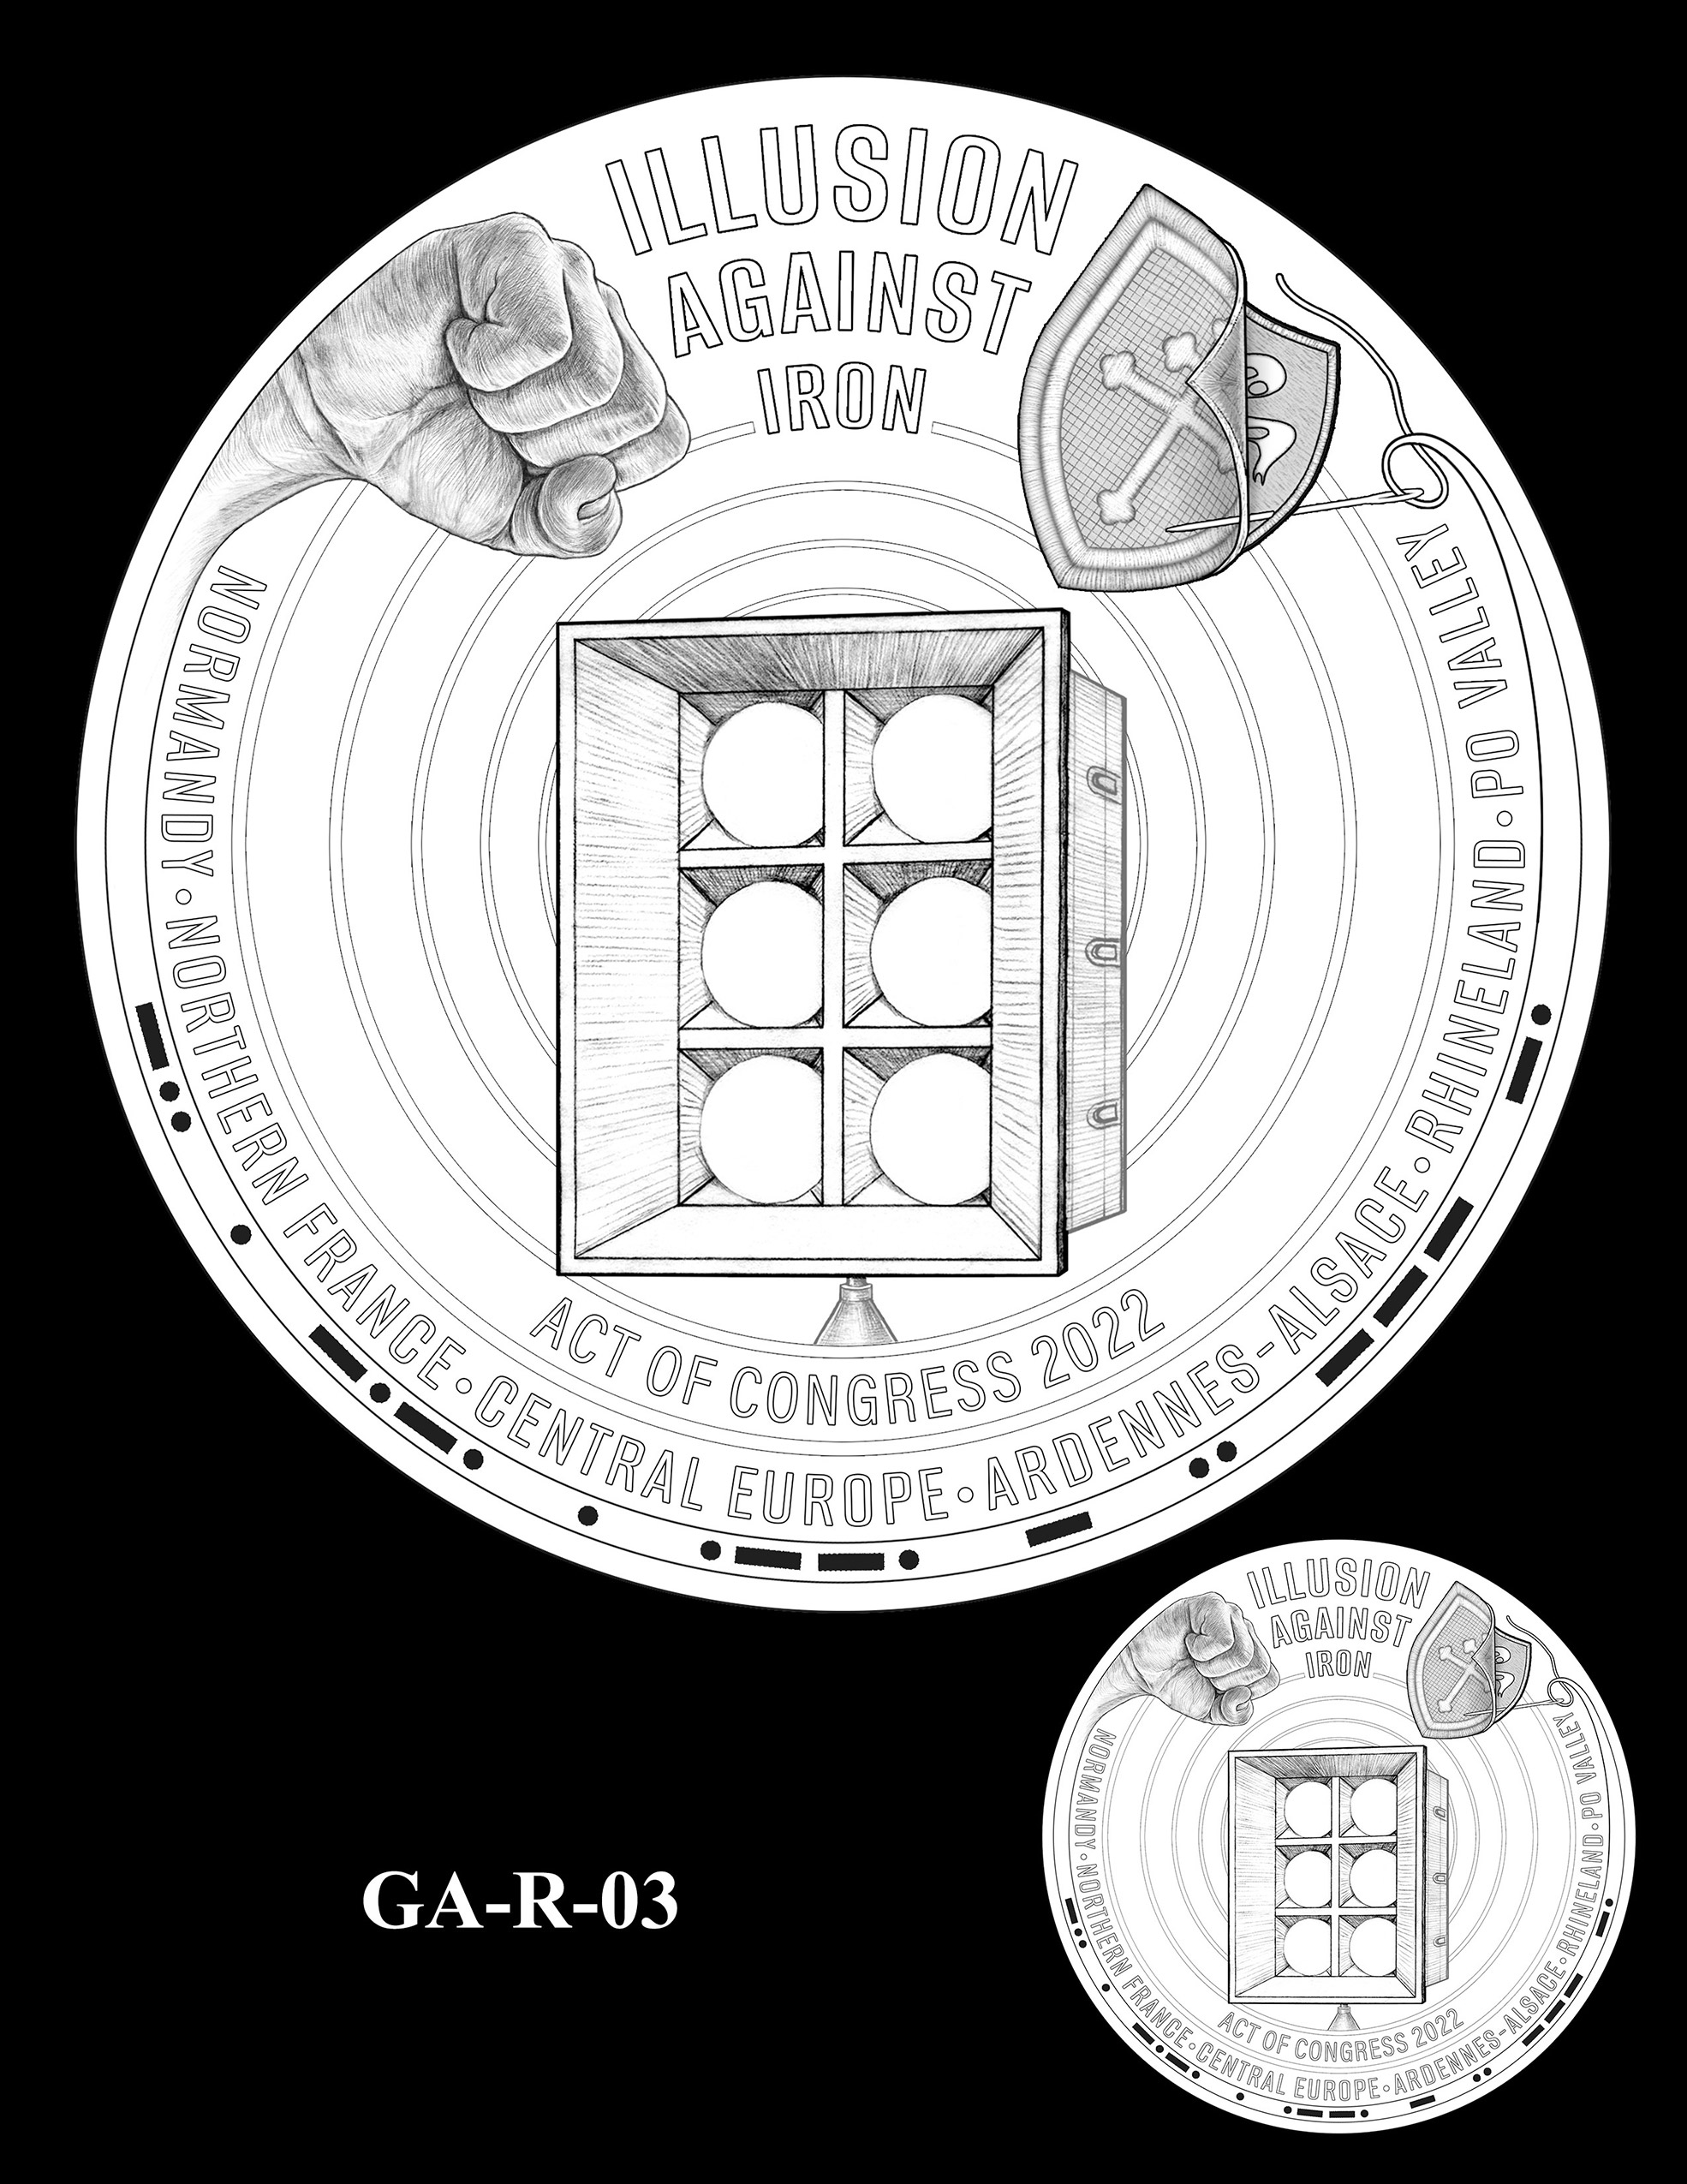 GA-R-03 -- Ghost Army Congressional Gold Medal